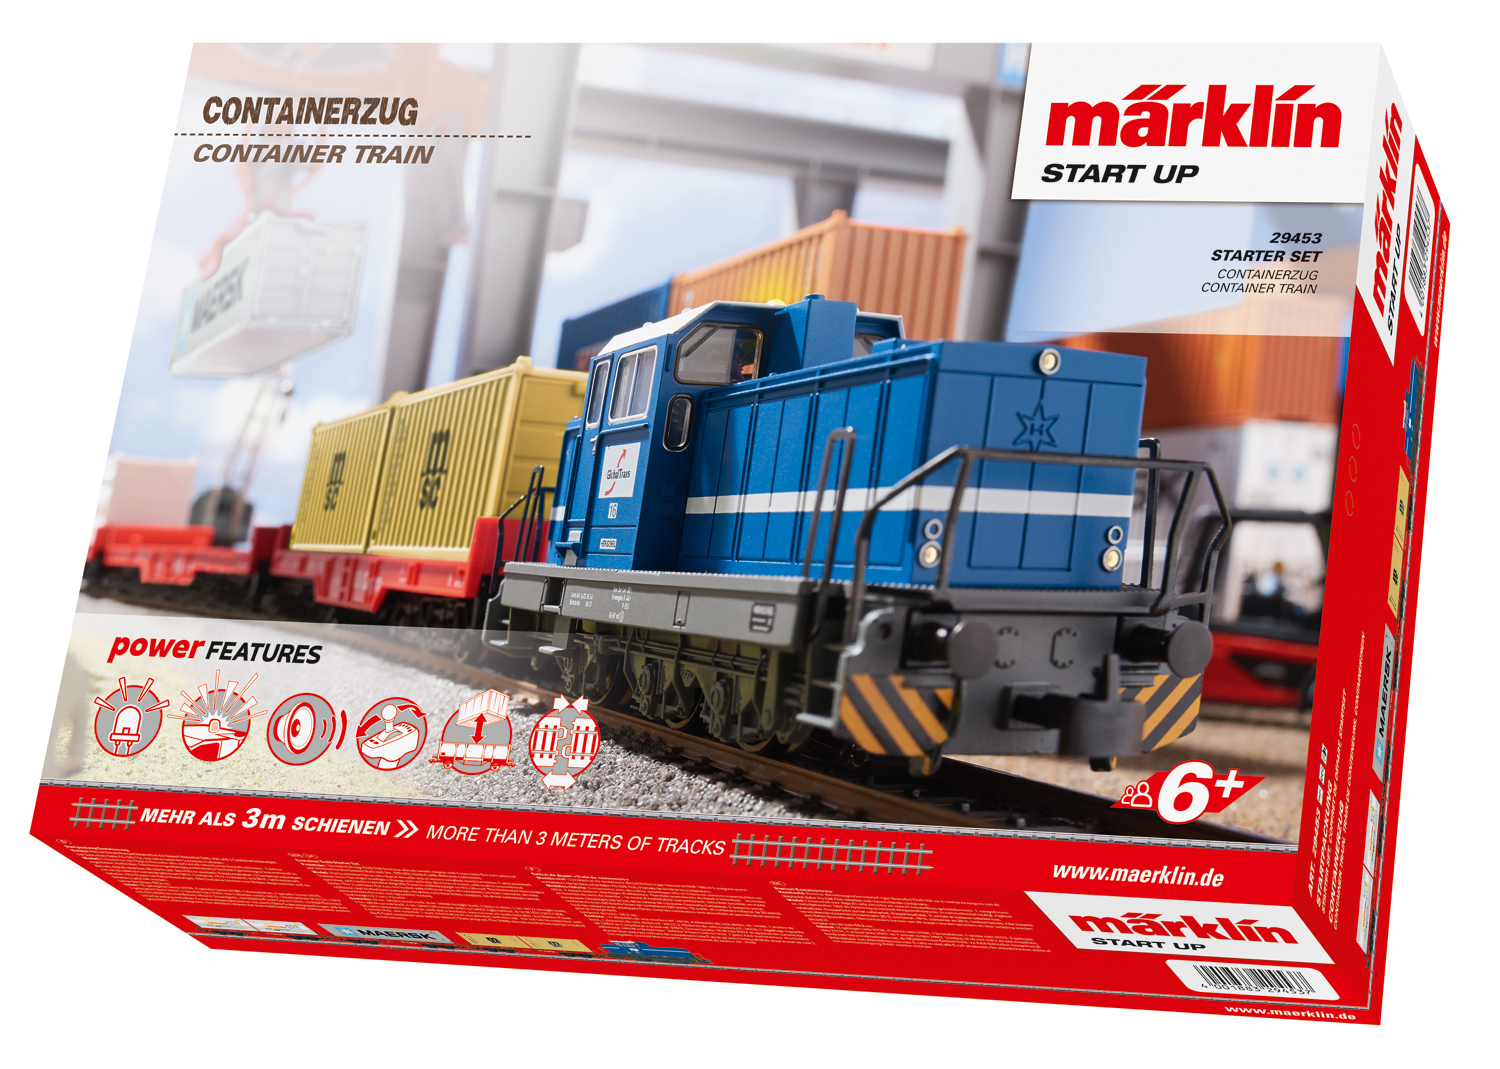 Märklin 29453 Start up Startpackung Containerzug 